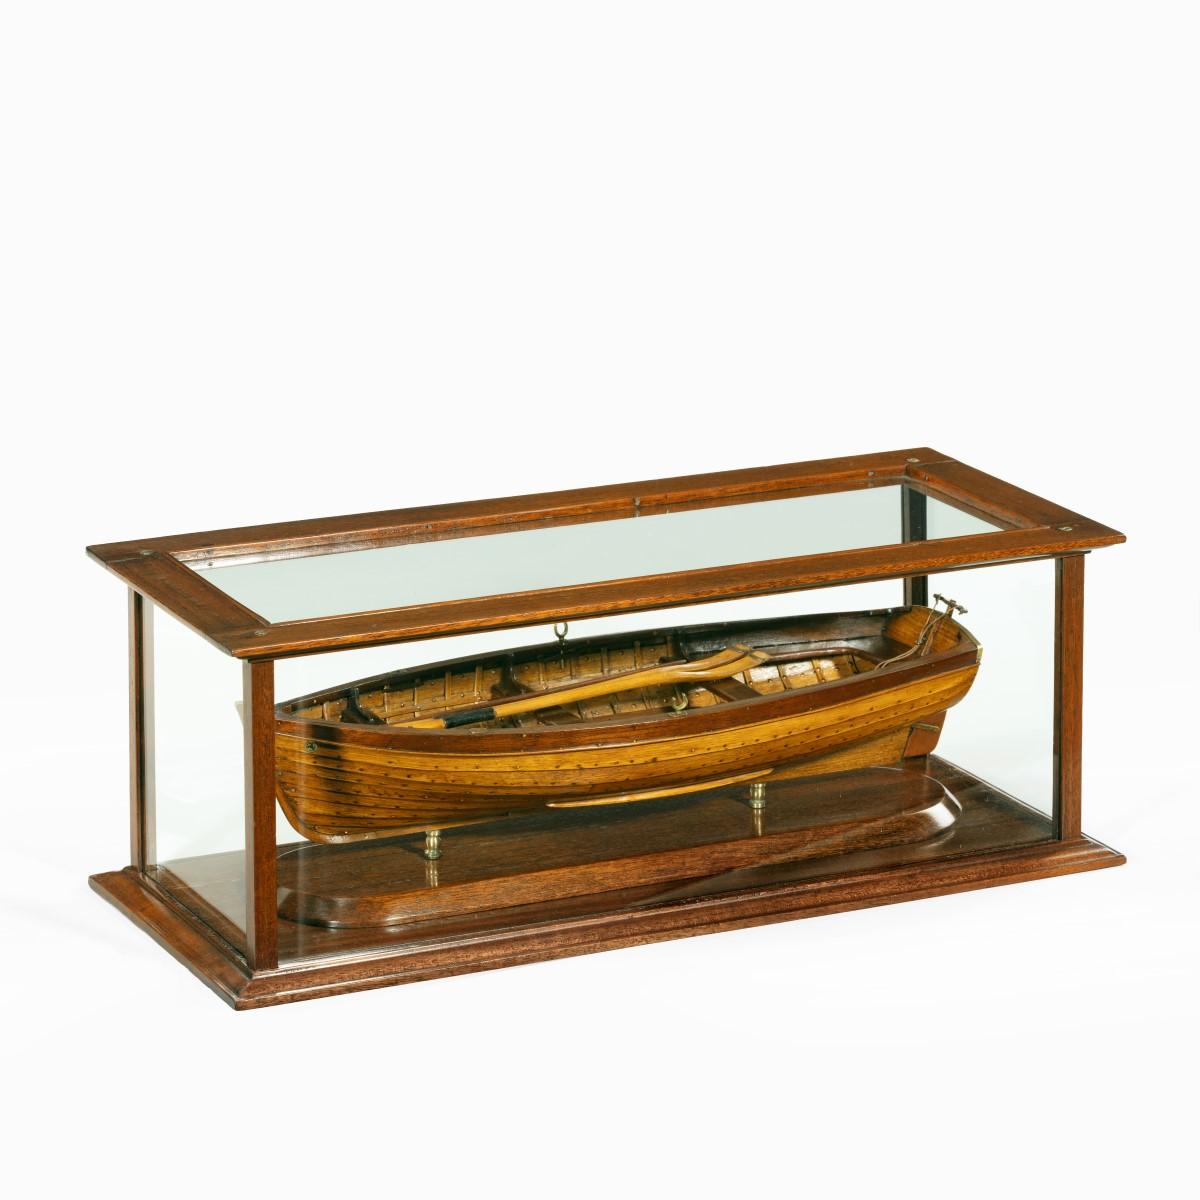 Edwardian Clinker-Built Model of a Gentleman’s Yacht Tender 1